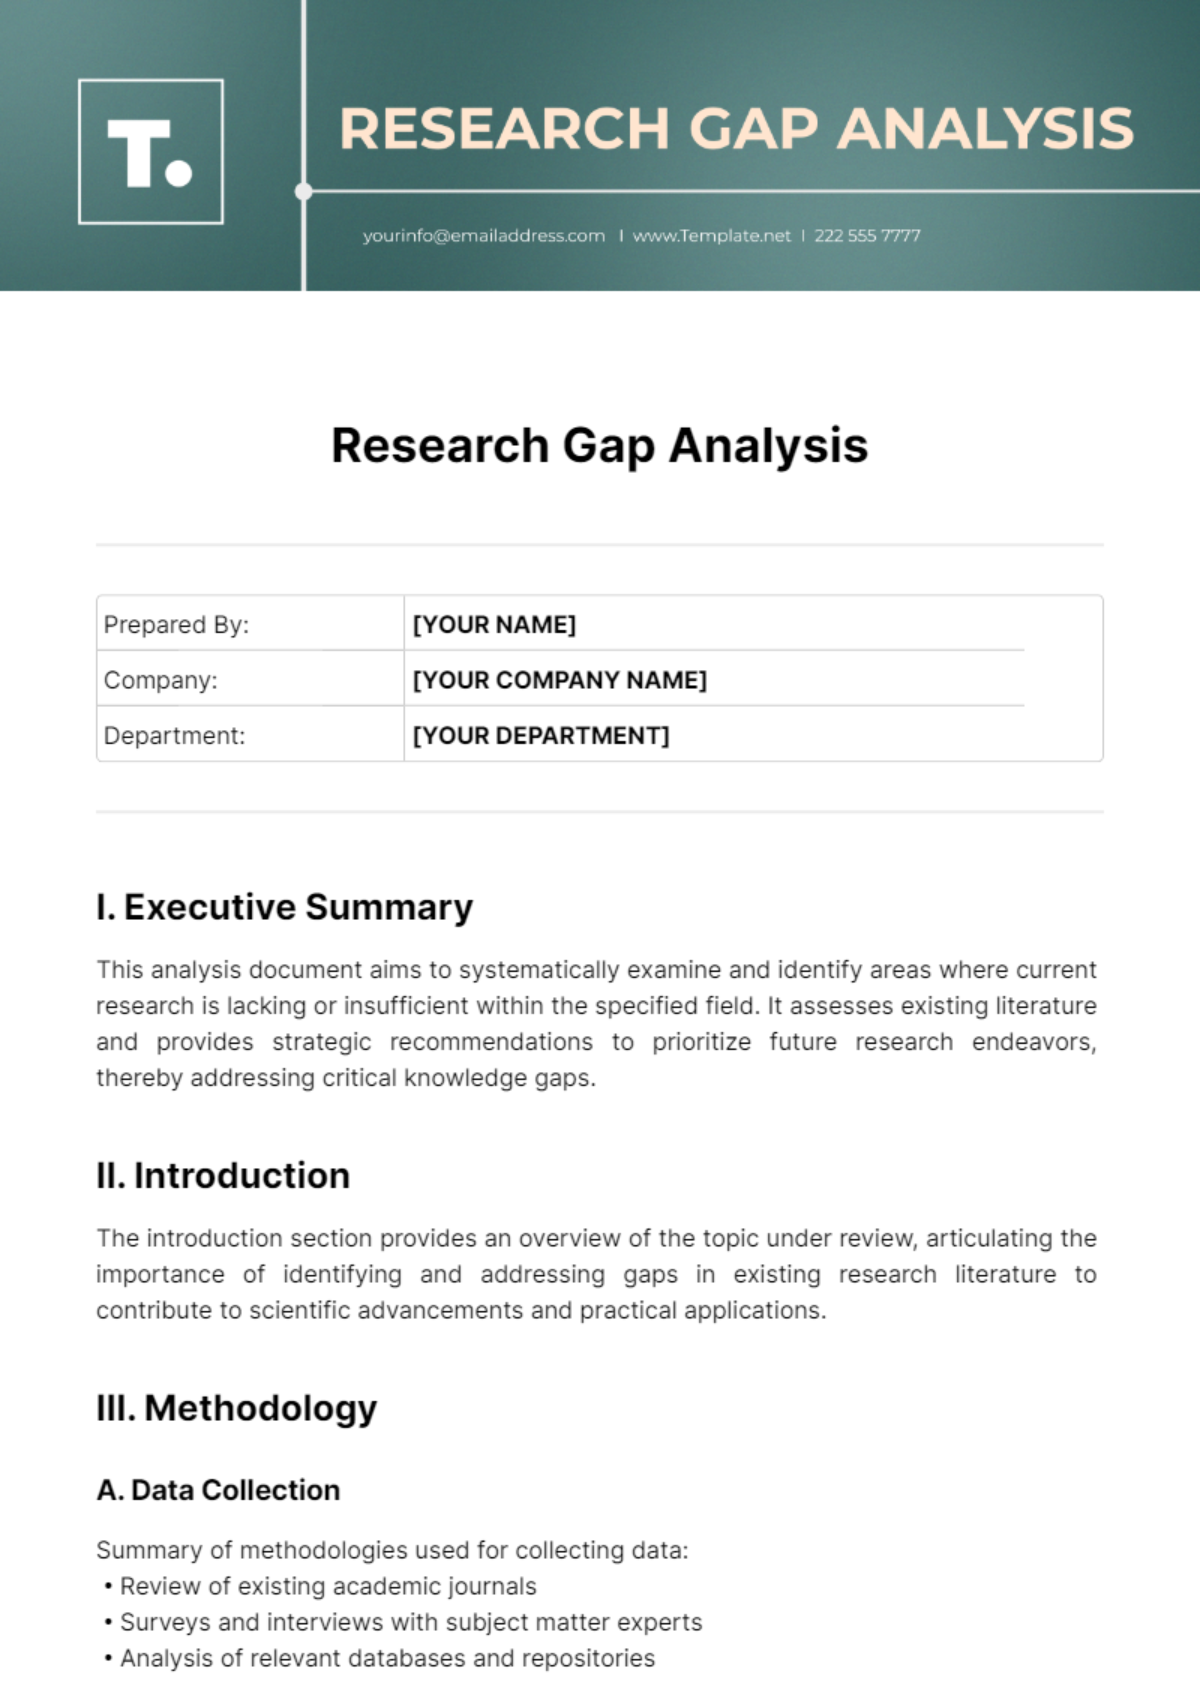 Research Gap Analysis Template